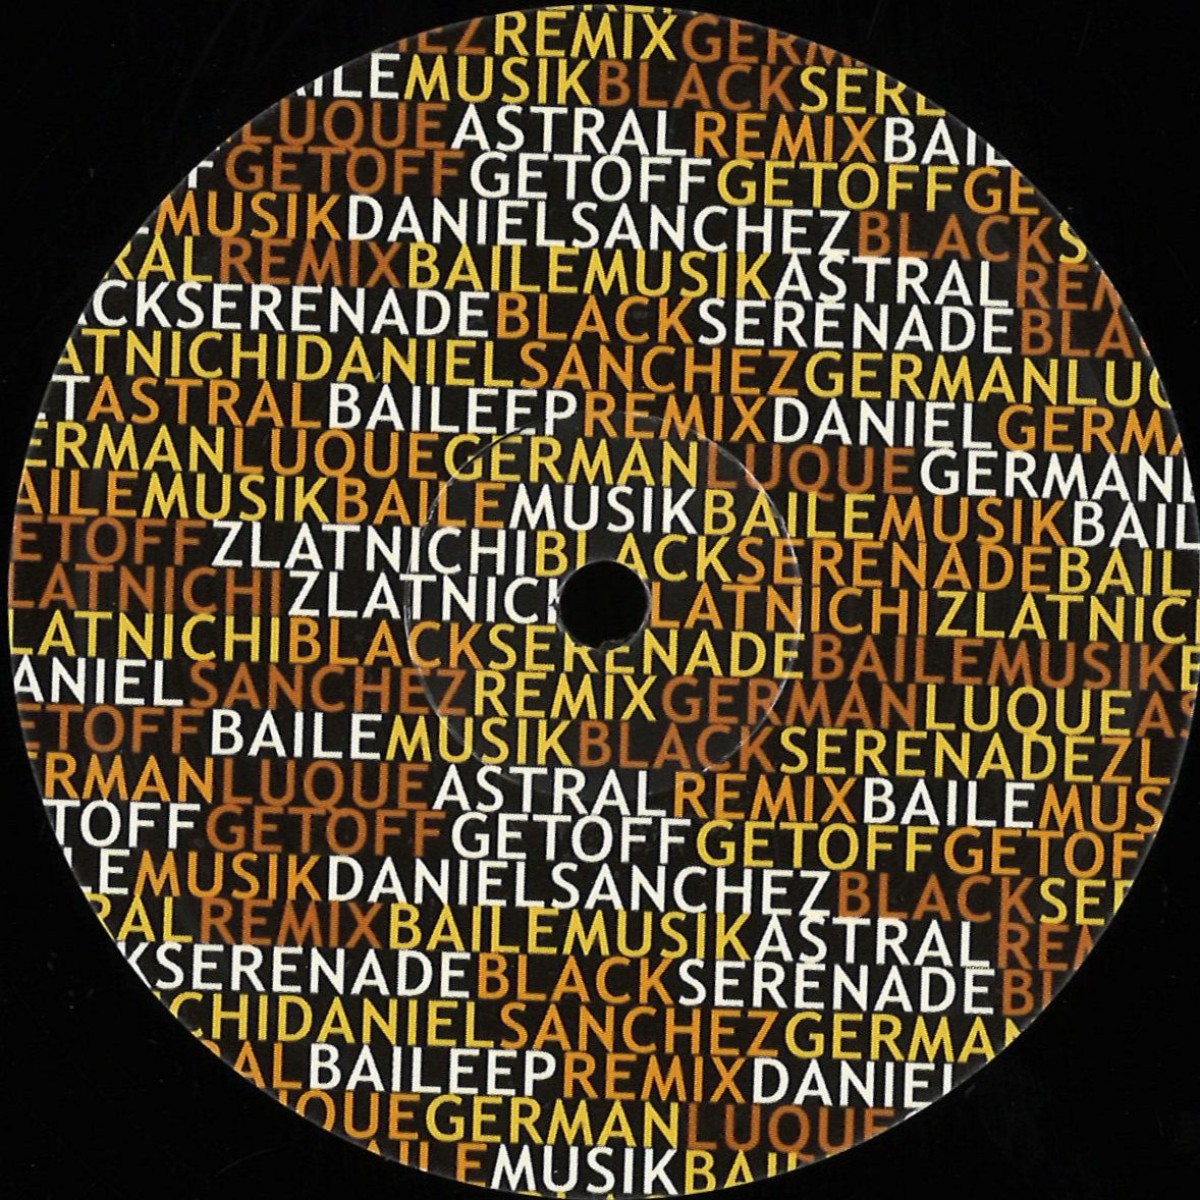 Zlatnichi - Black Serenade / Baile Musik BM175 - Vinyl